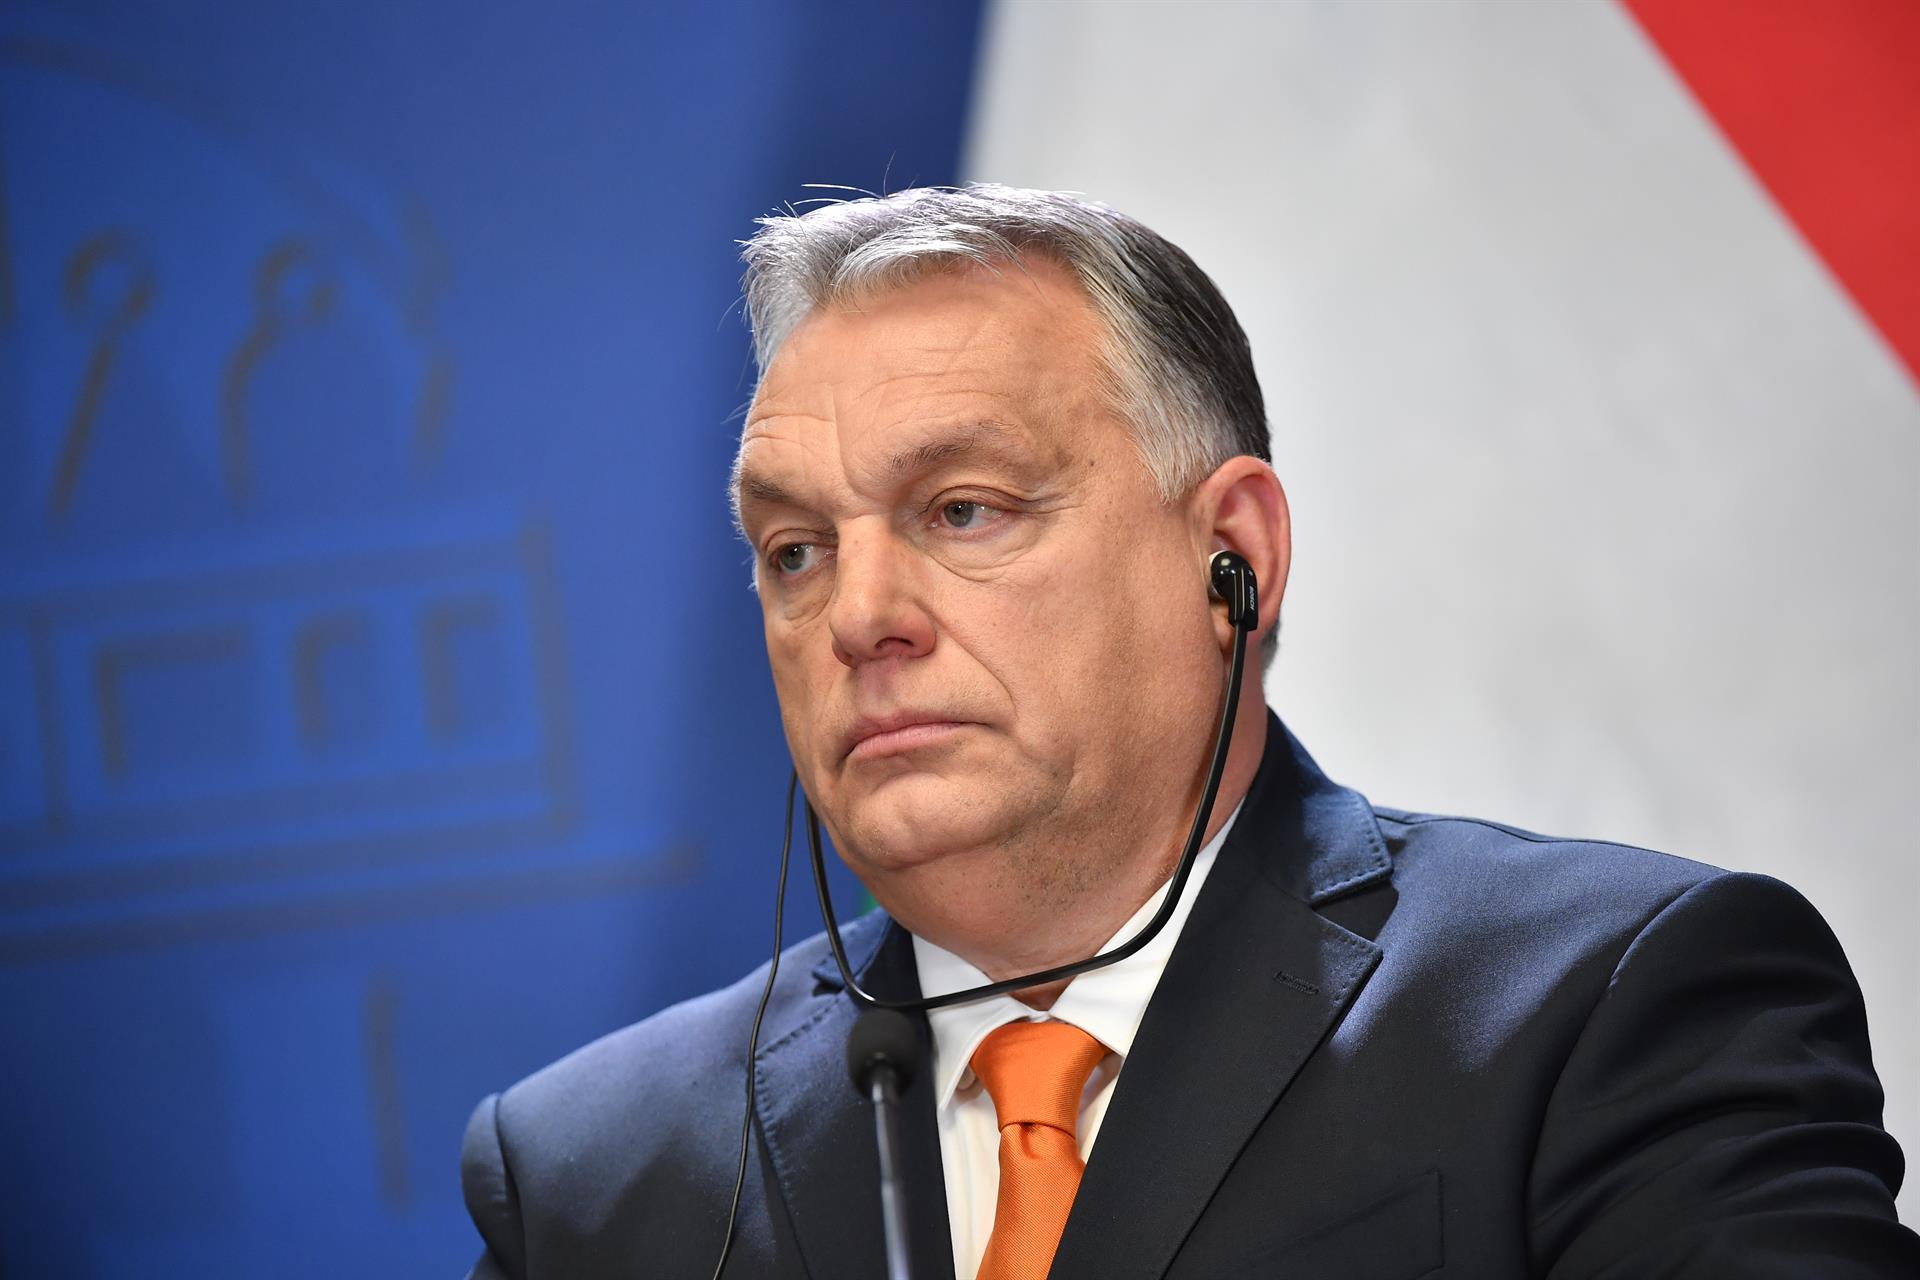 El primer ministro de Hungría, Viktor Orban. FOTO: Marton Monus/dpa